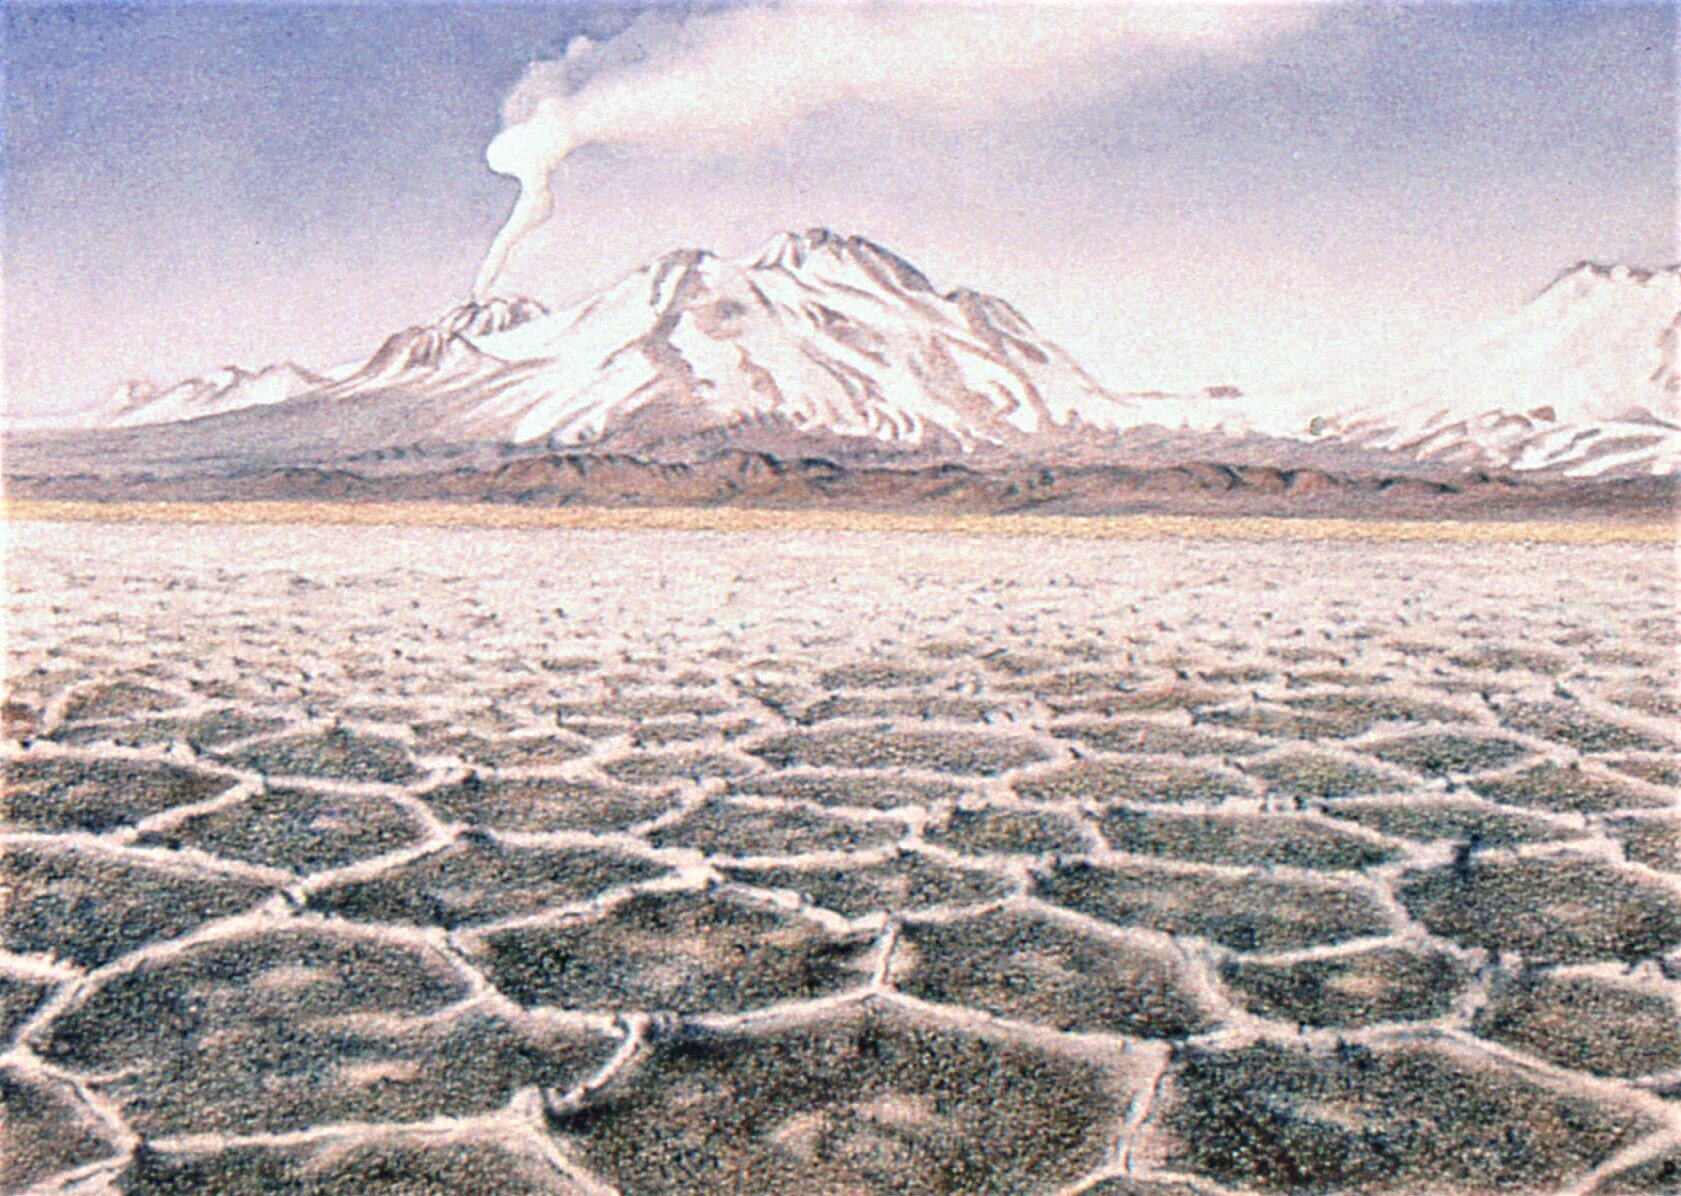    Volcan Lascar and salt polygones , 23 x 30.5cm, pencil on paper, 1984.  